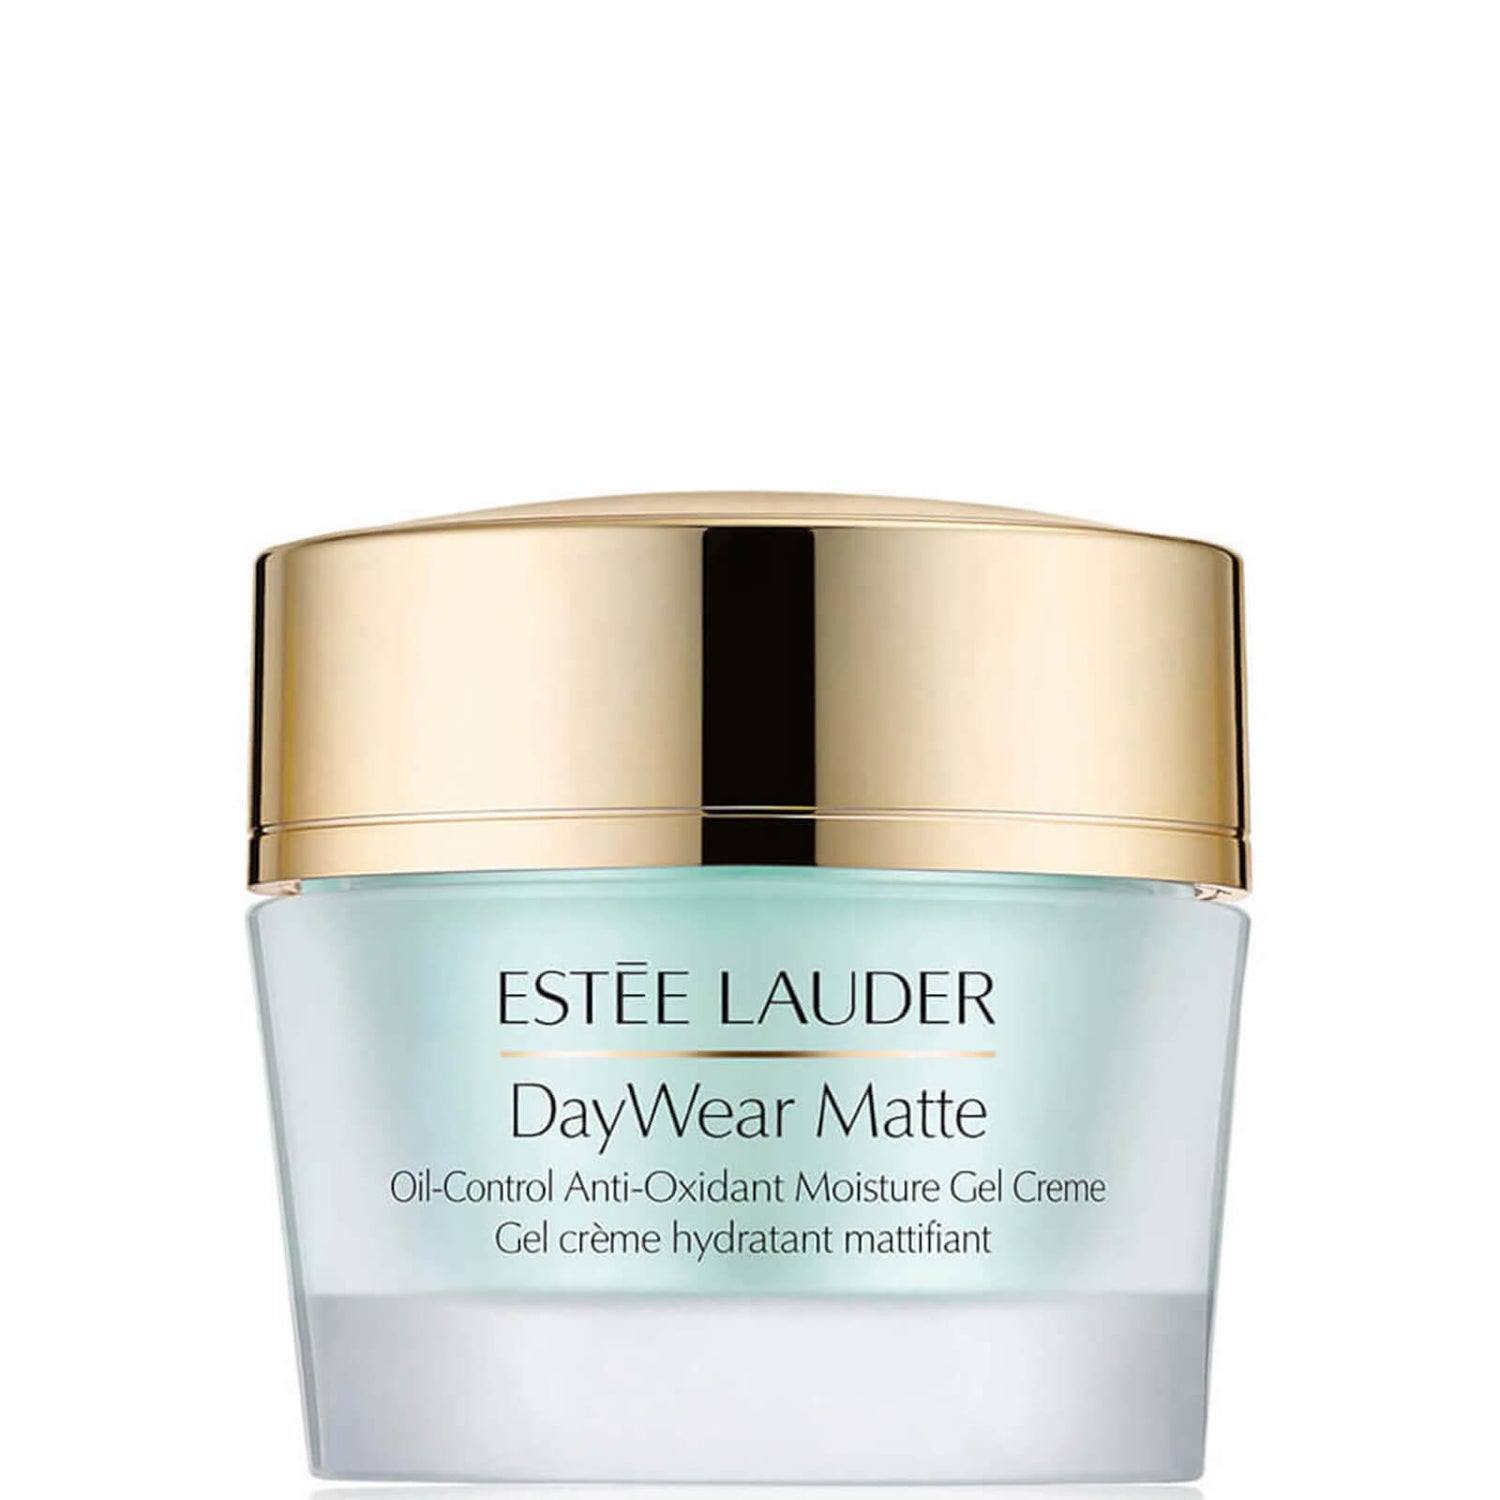 Estee Lauder DayWear Matte Oil-Control Anti-Oxidant Moisture Gel Crème 1.7 oz.